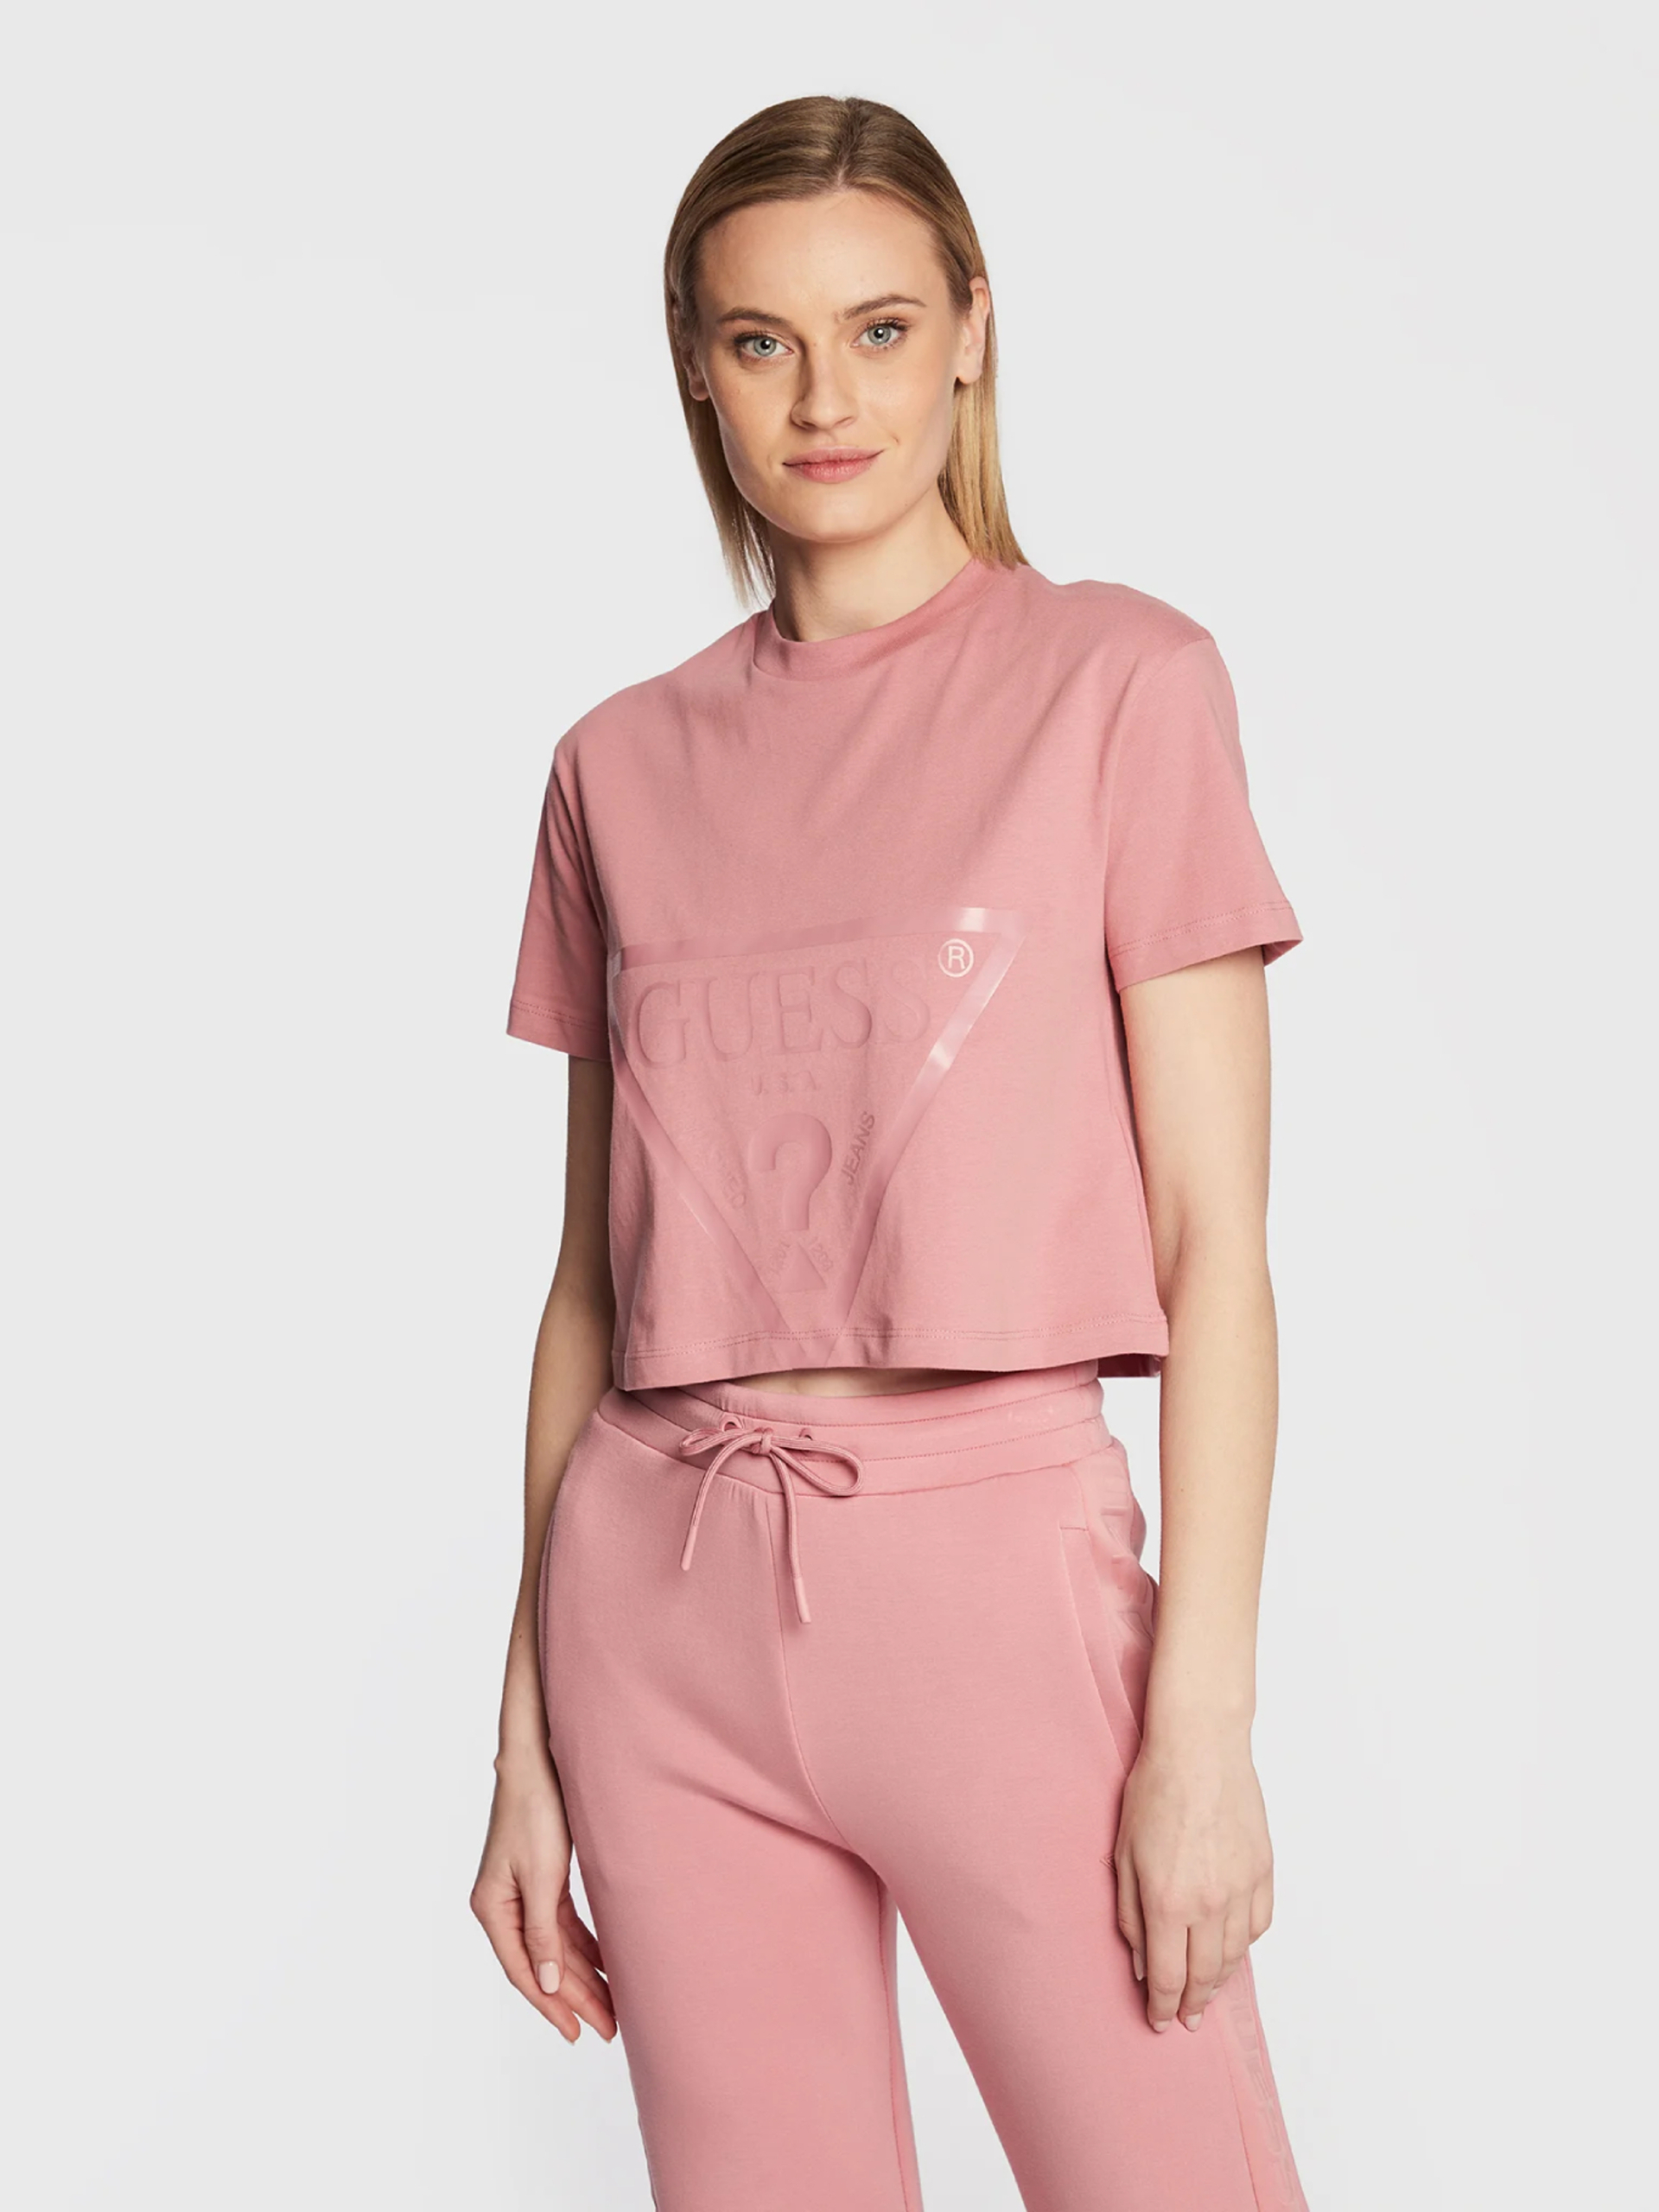 Guess dámské růžové tričko - M (BLPN)